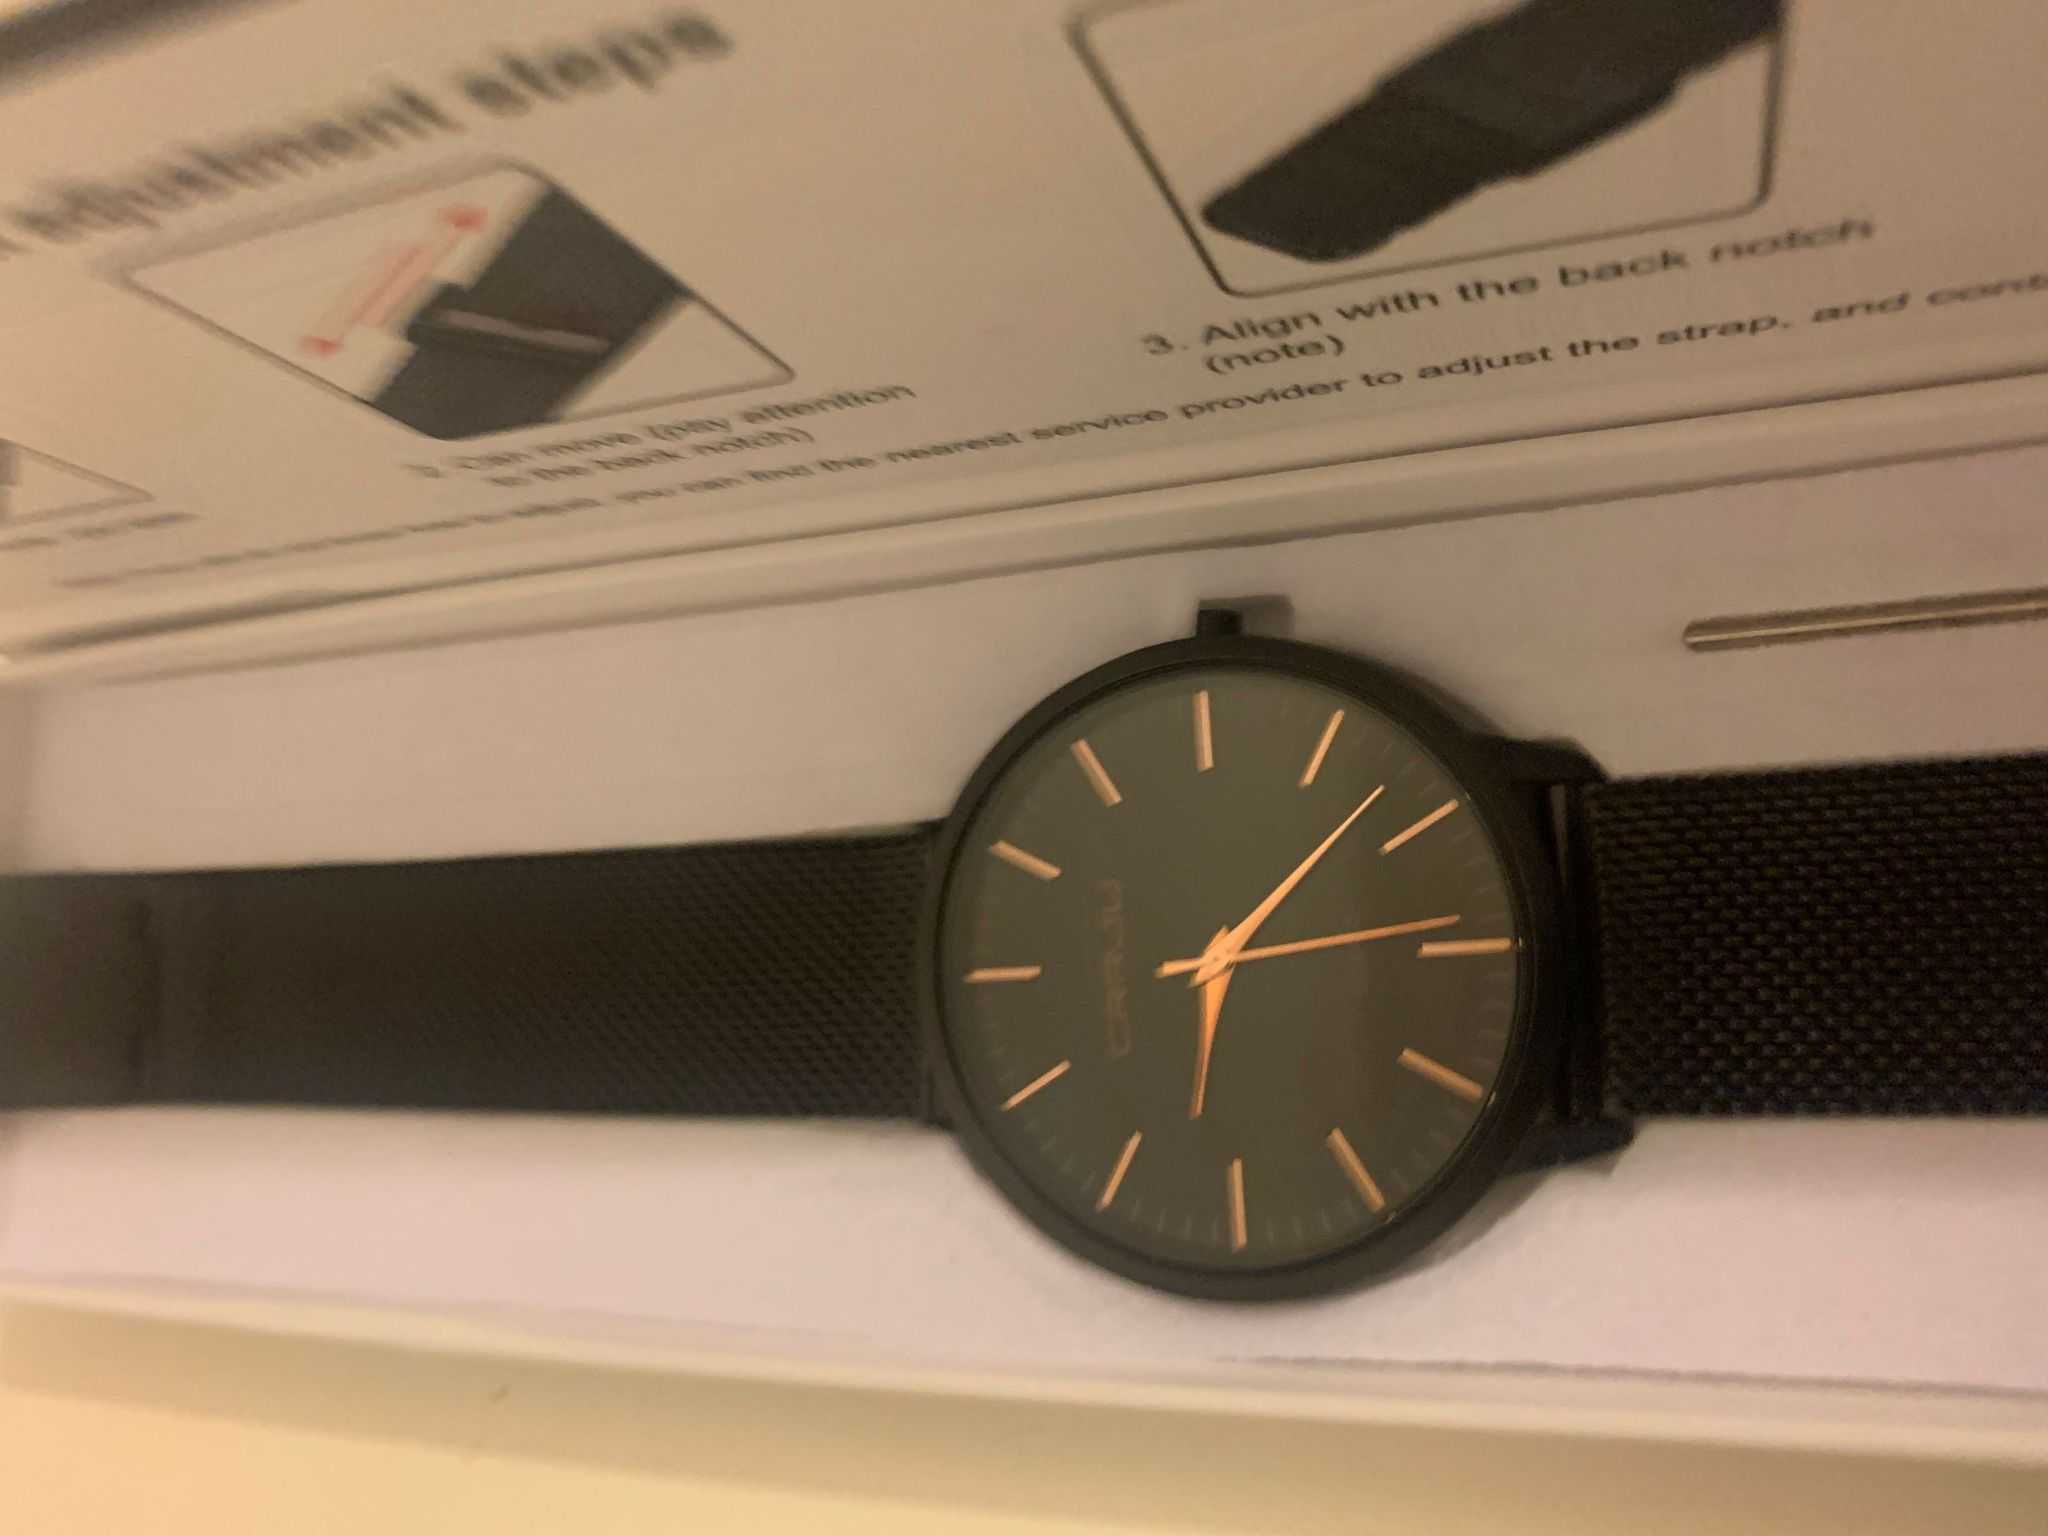 Relógio Masculino Casual Ultra Fino De Luxo Preto E Dourado - CRRJU